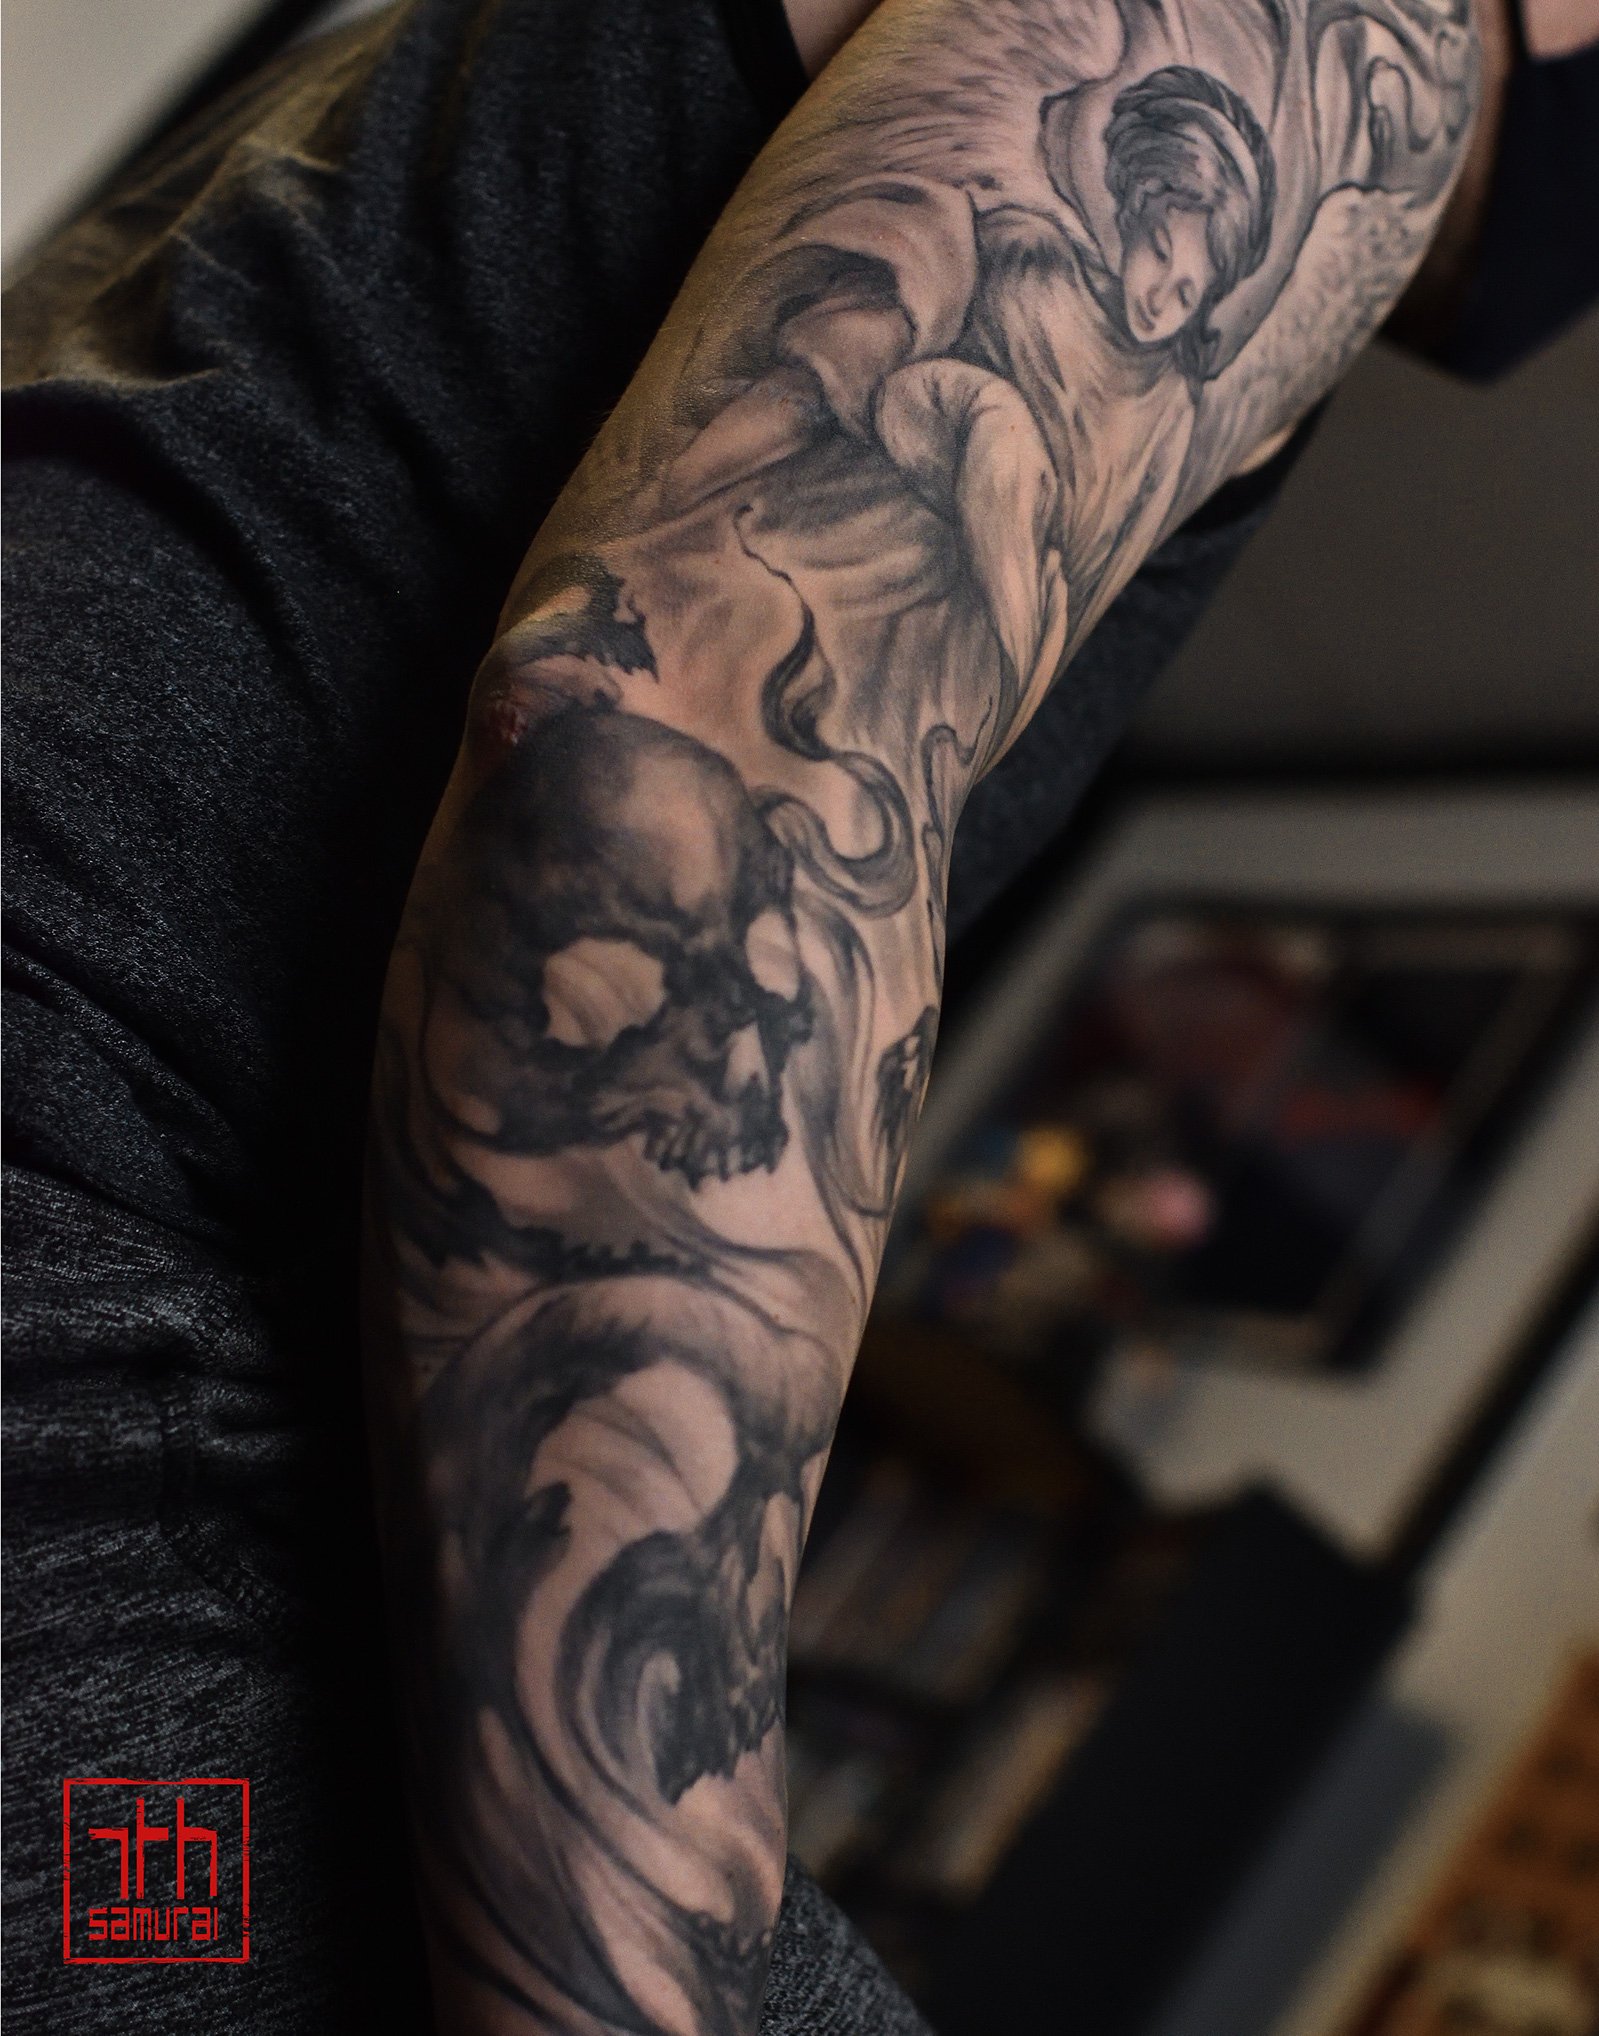 angel vs warding off skull demons rose clock   Men's religious realism tattoo sleeve  asian Tattoo artist: Kai at 7th Samurai. YEG Edmonton, Alberta, Canada) best 2020 